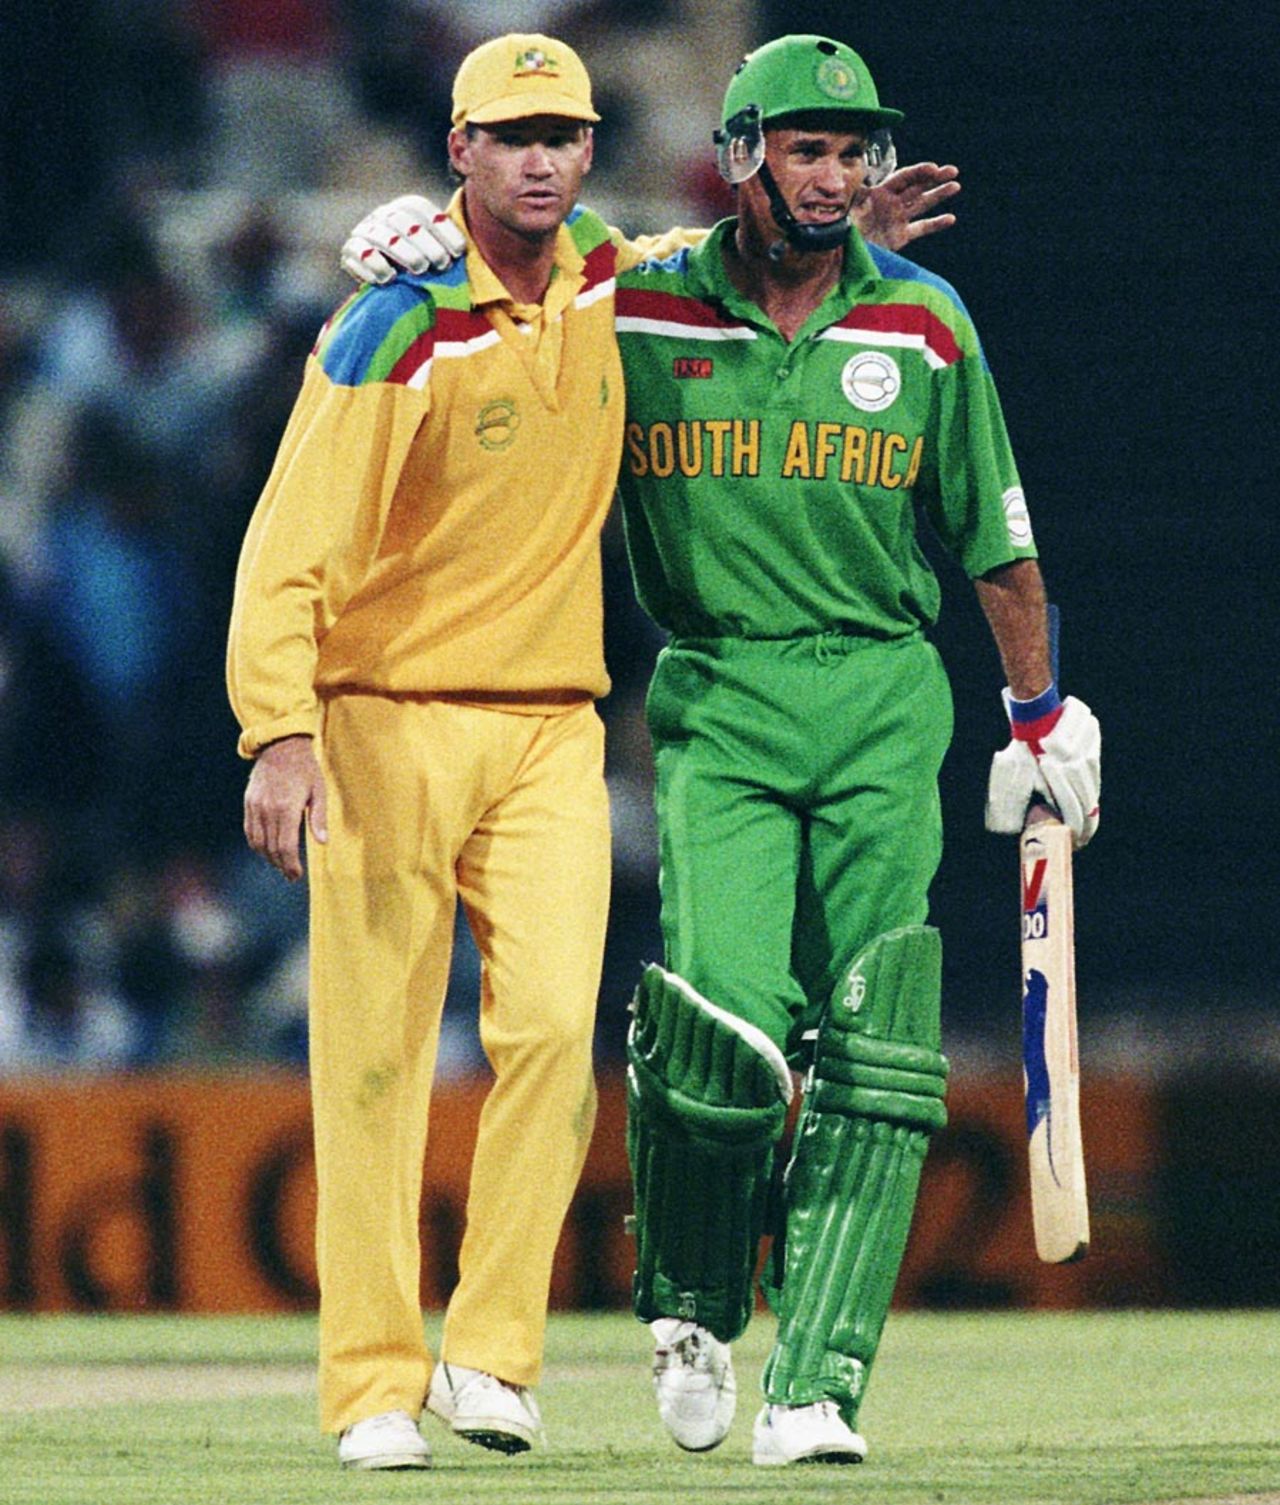 Dean Jones and Kepler Wessels, Australia v South Africa, World Cup, Sydney, February 26, 1992